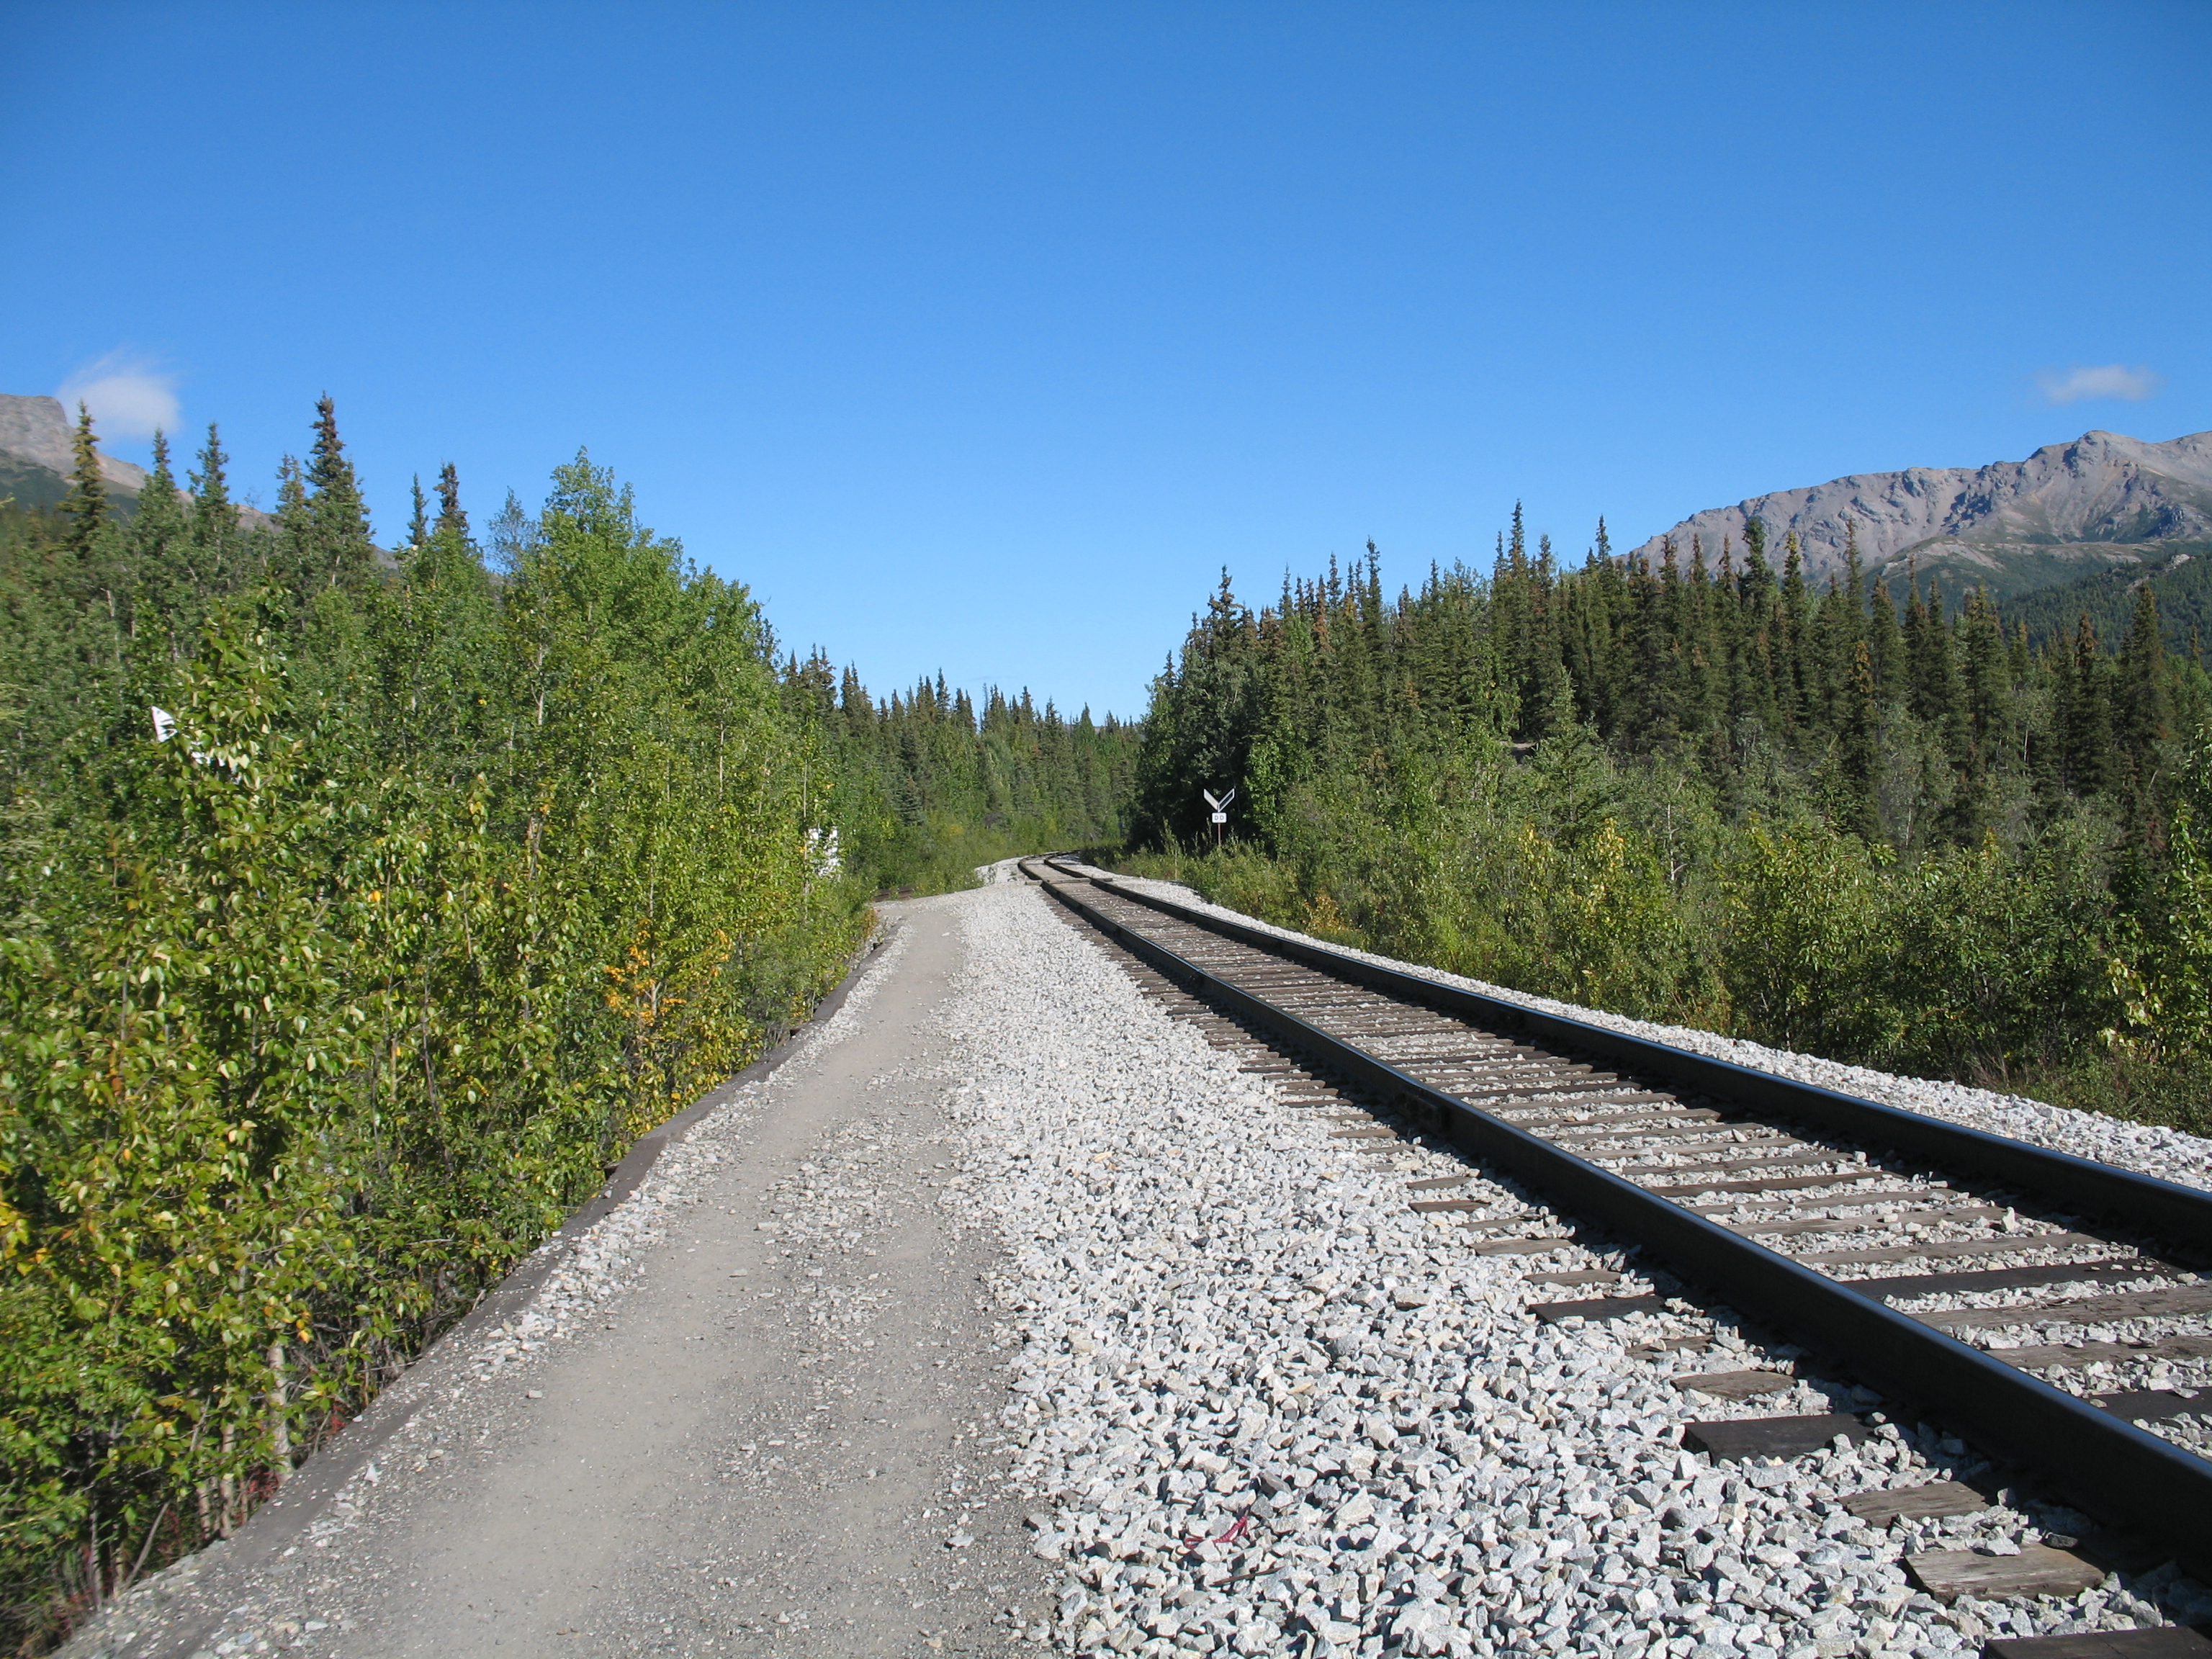 File:Alaska Railroad tracks - Wikimedia Commons